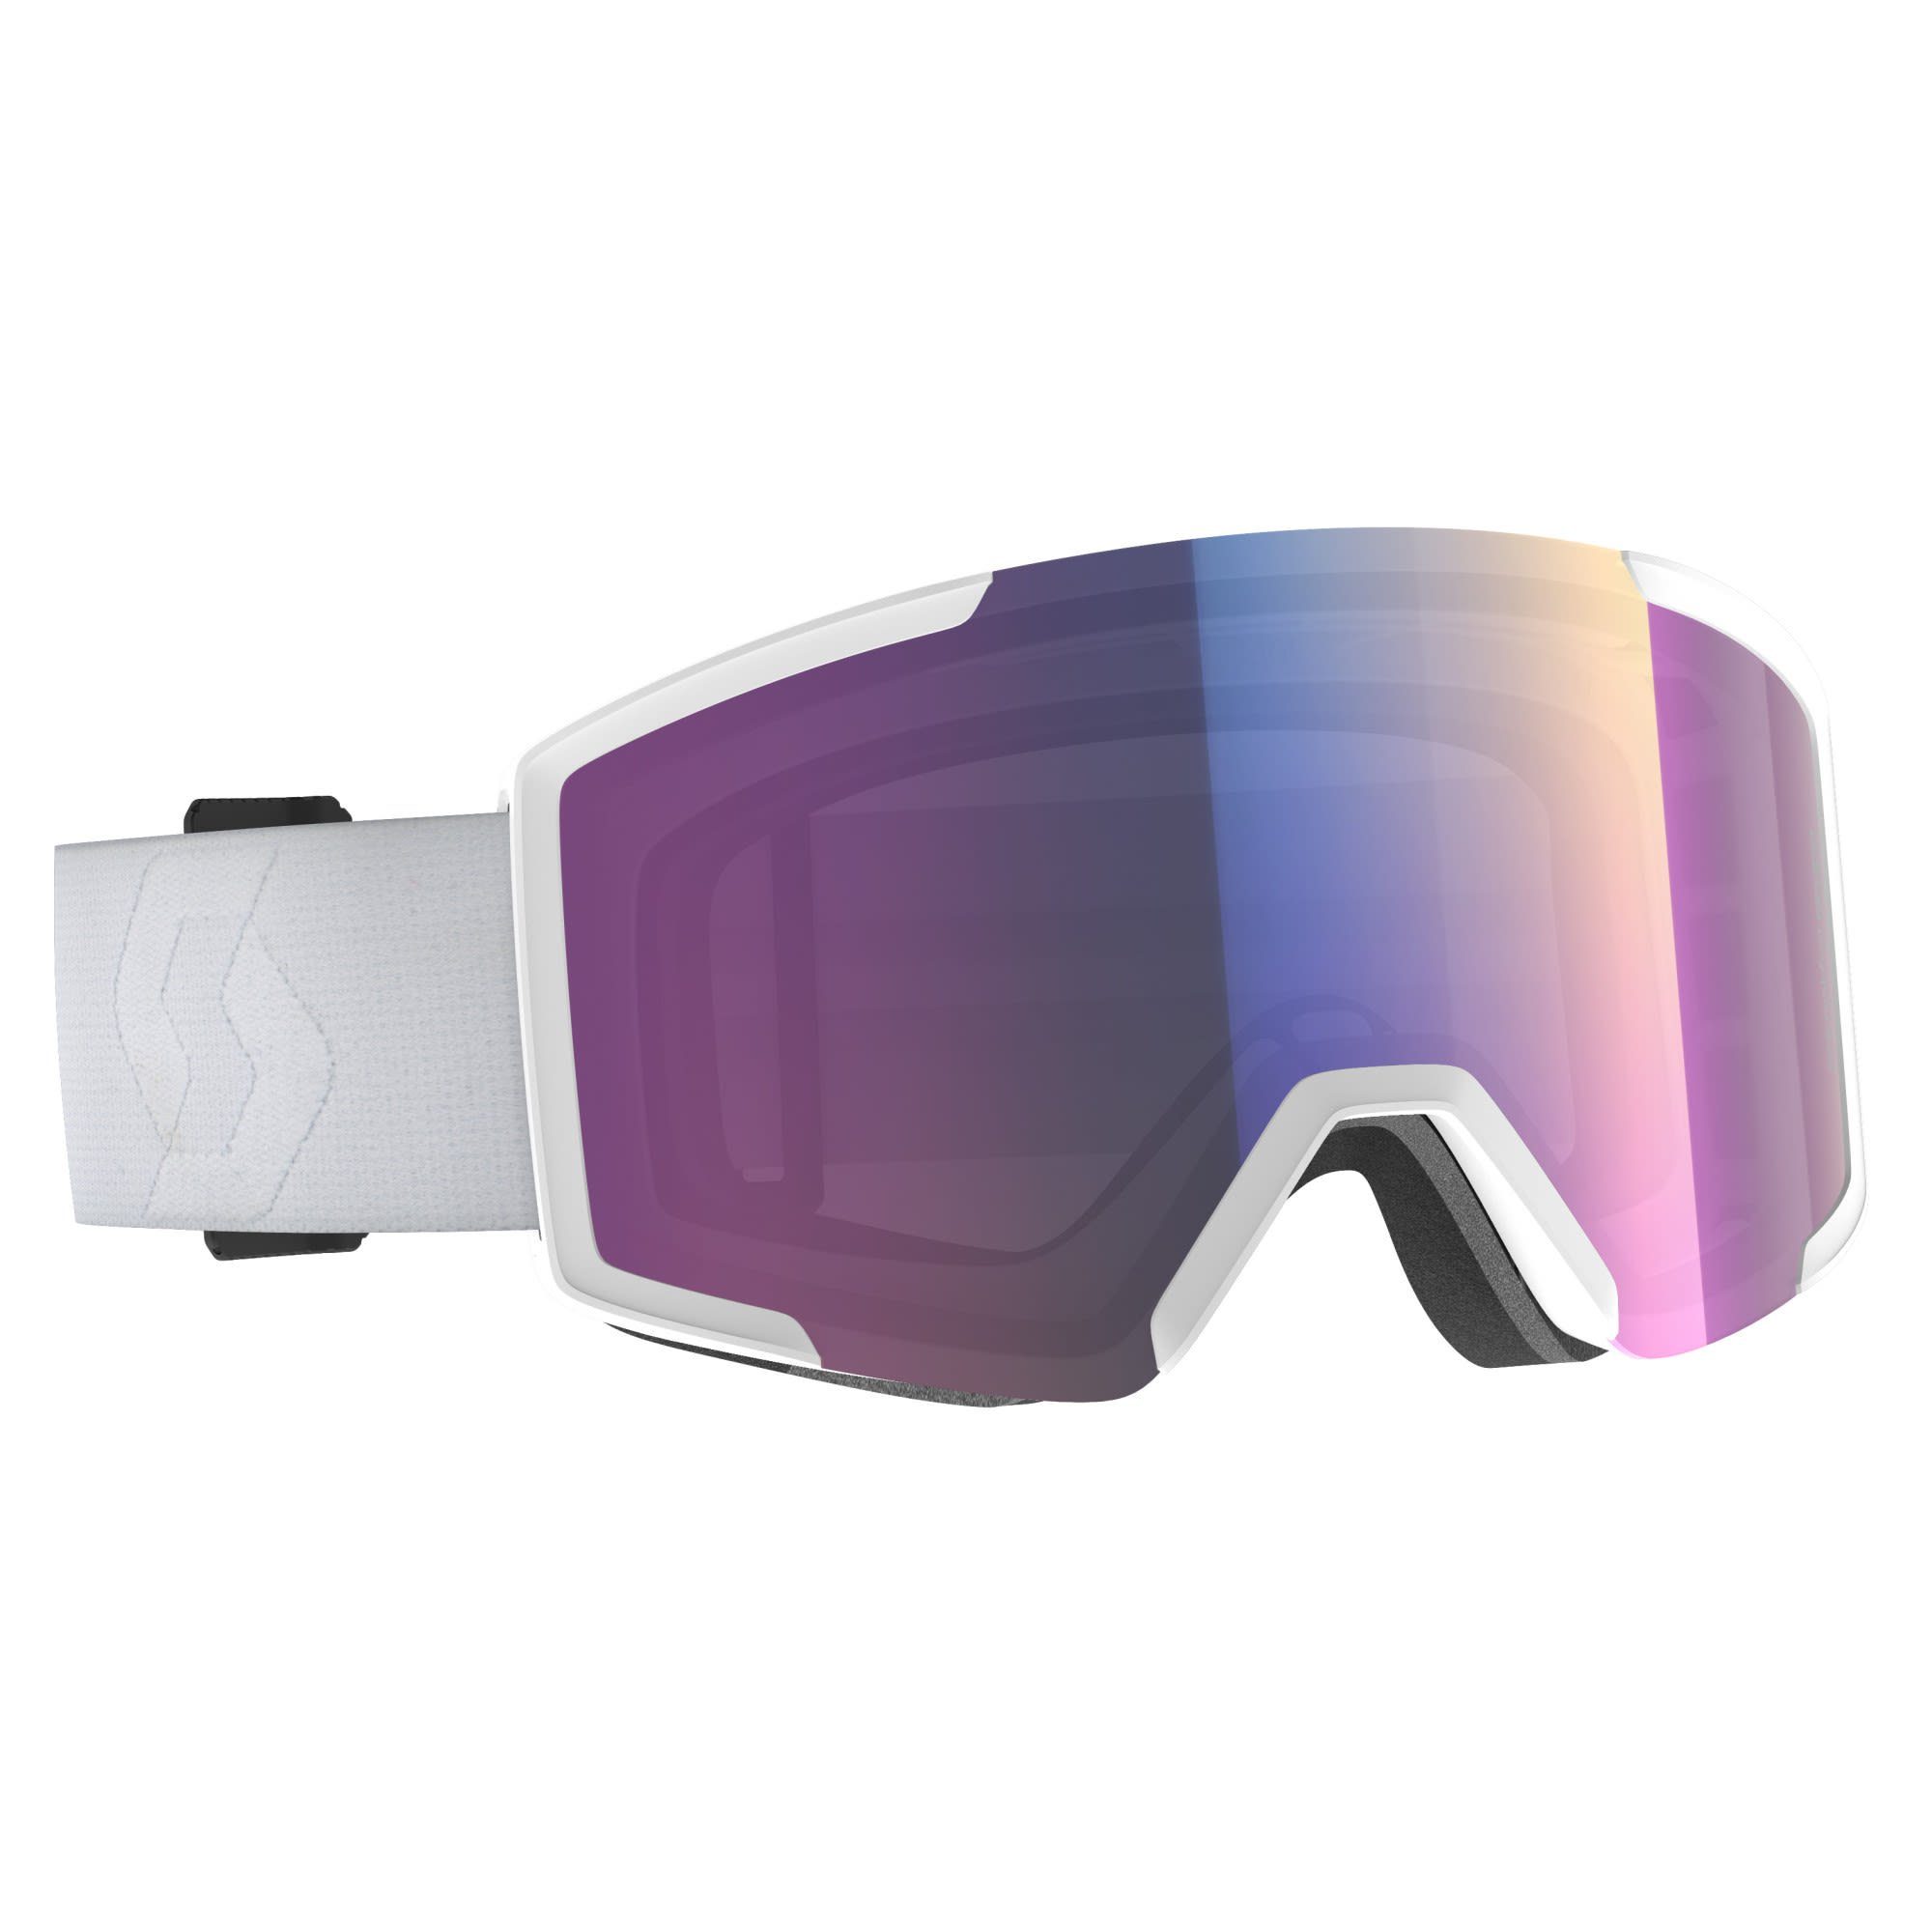 Mineral + Accessoires Goggle Skibrille - Scott Scott Lens Extra Shield Chrome White Teal Enhancer